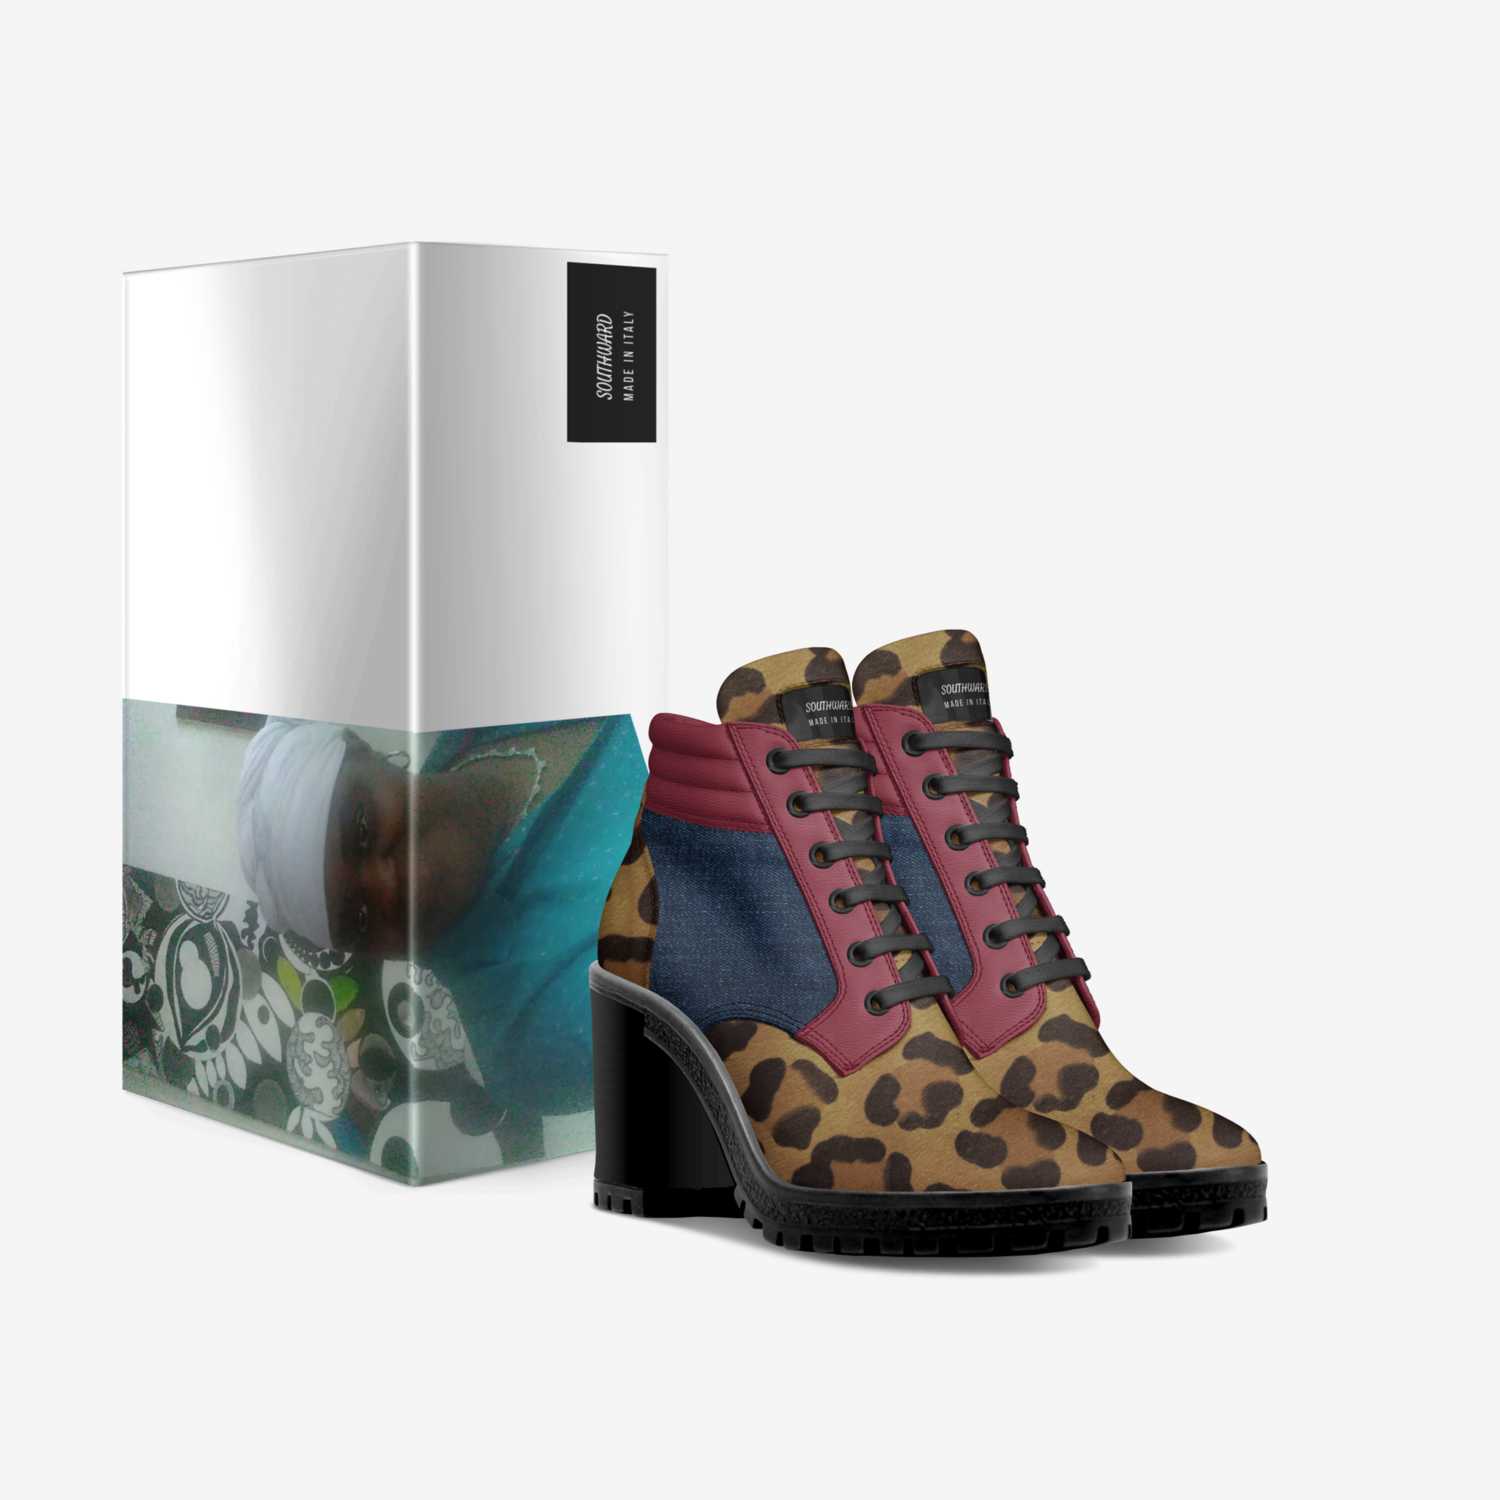 SOUTHWARD  custom made in Italy shoes by Lakeisha Sokoya | Box view